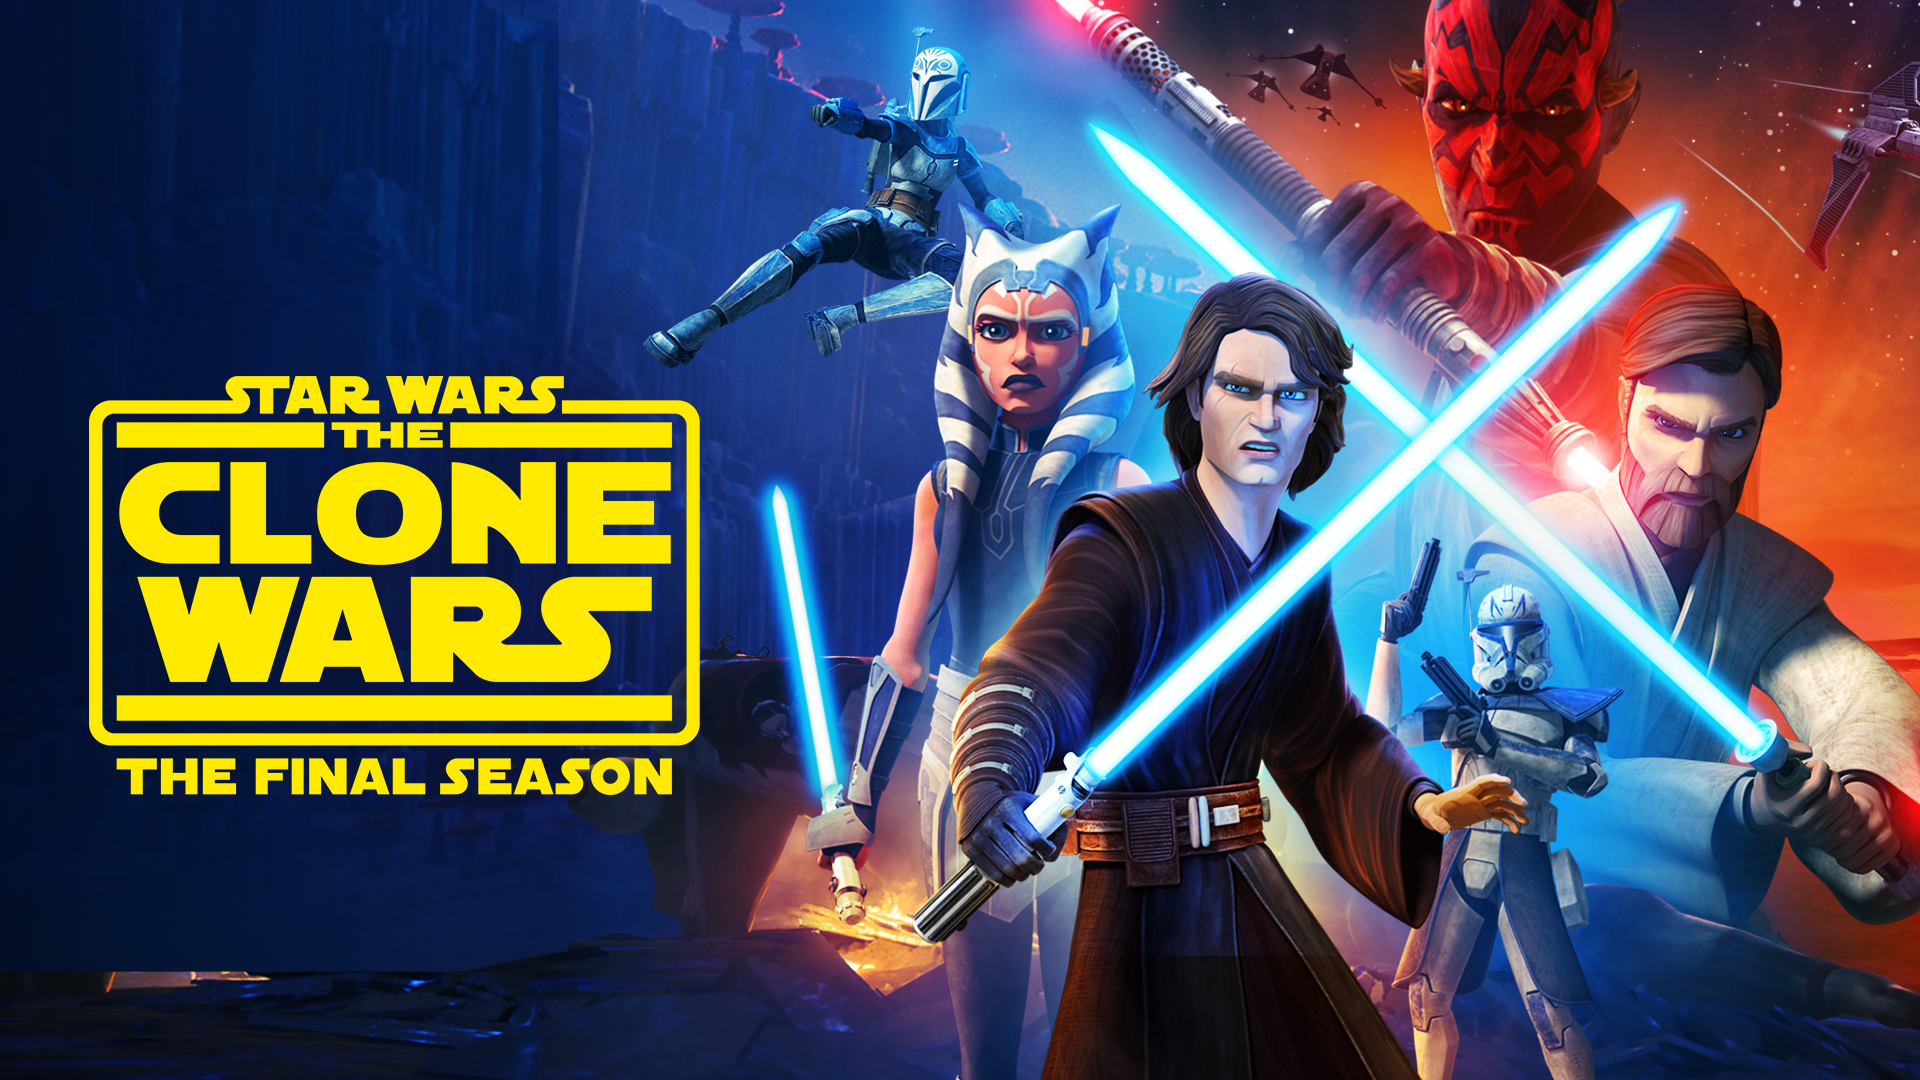 ‘Star Wars: The Clone Wars’ Series Finale Will Premiere on Star Wars Day